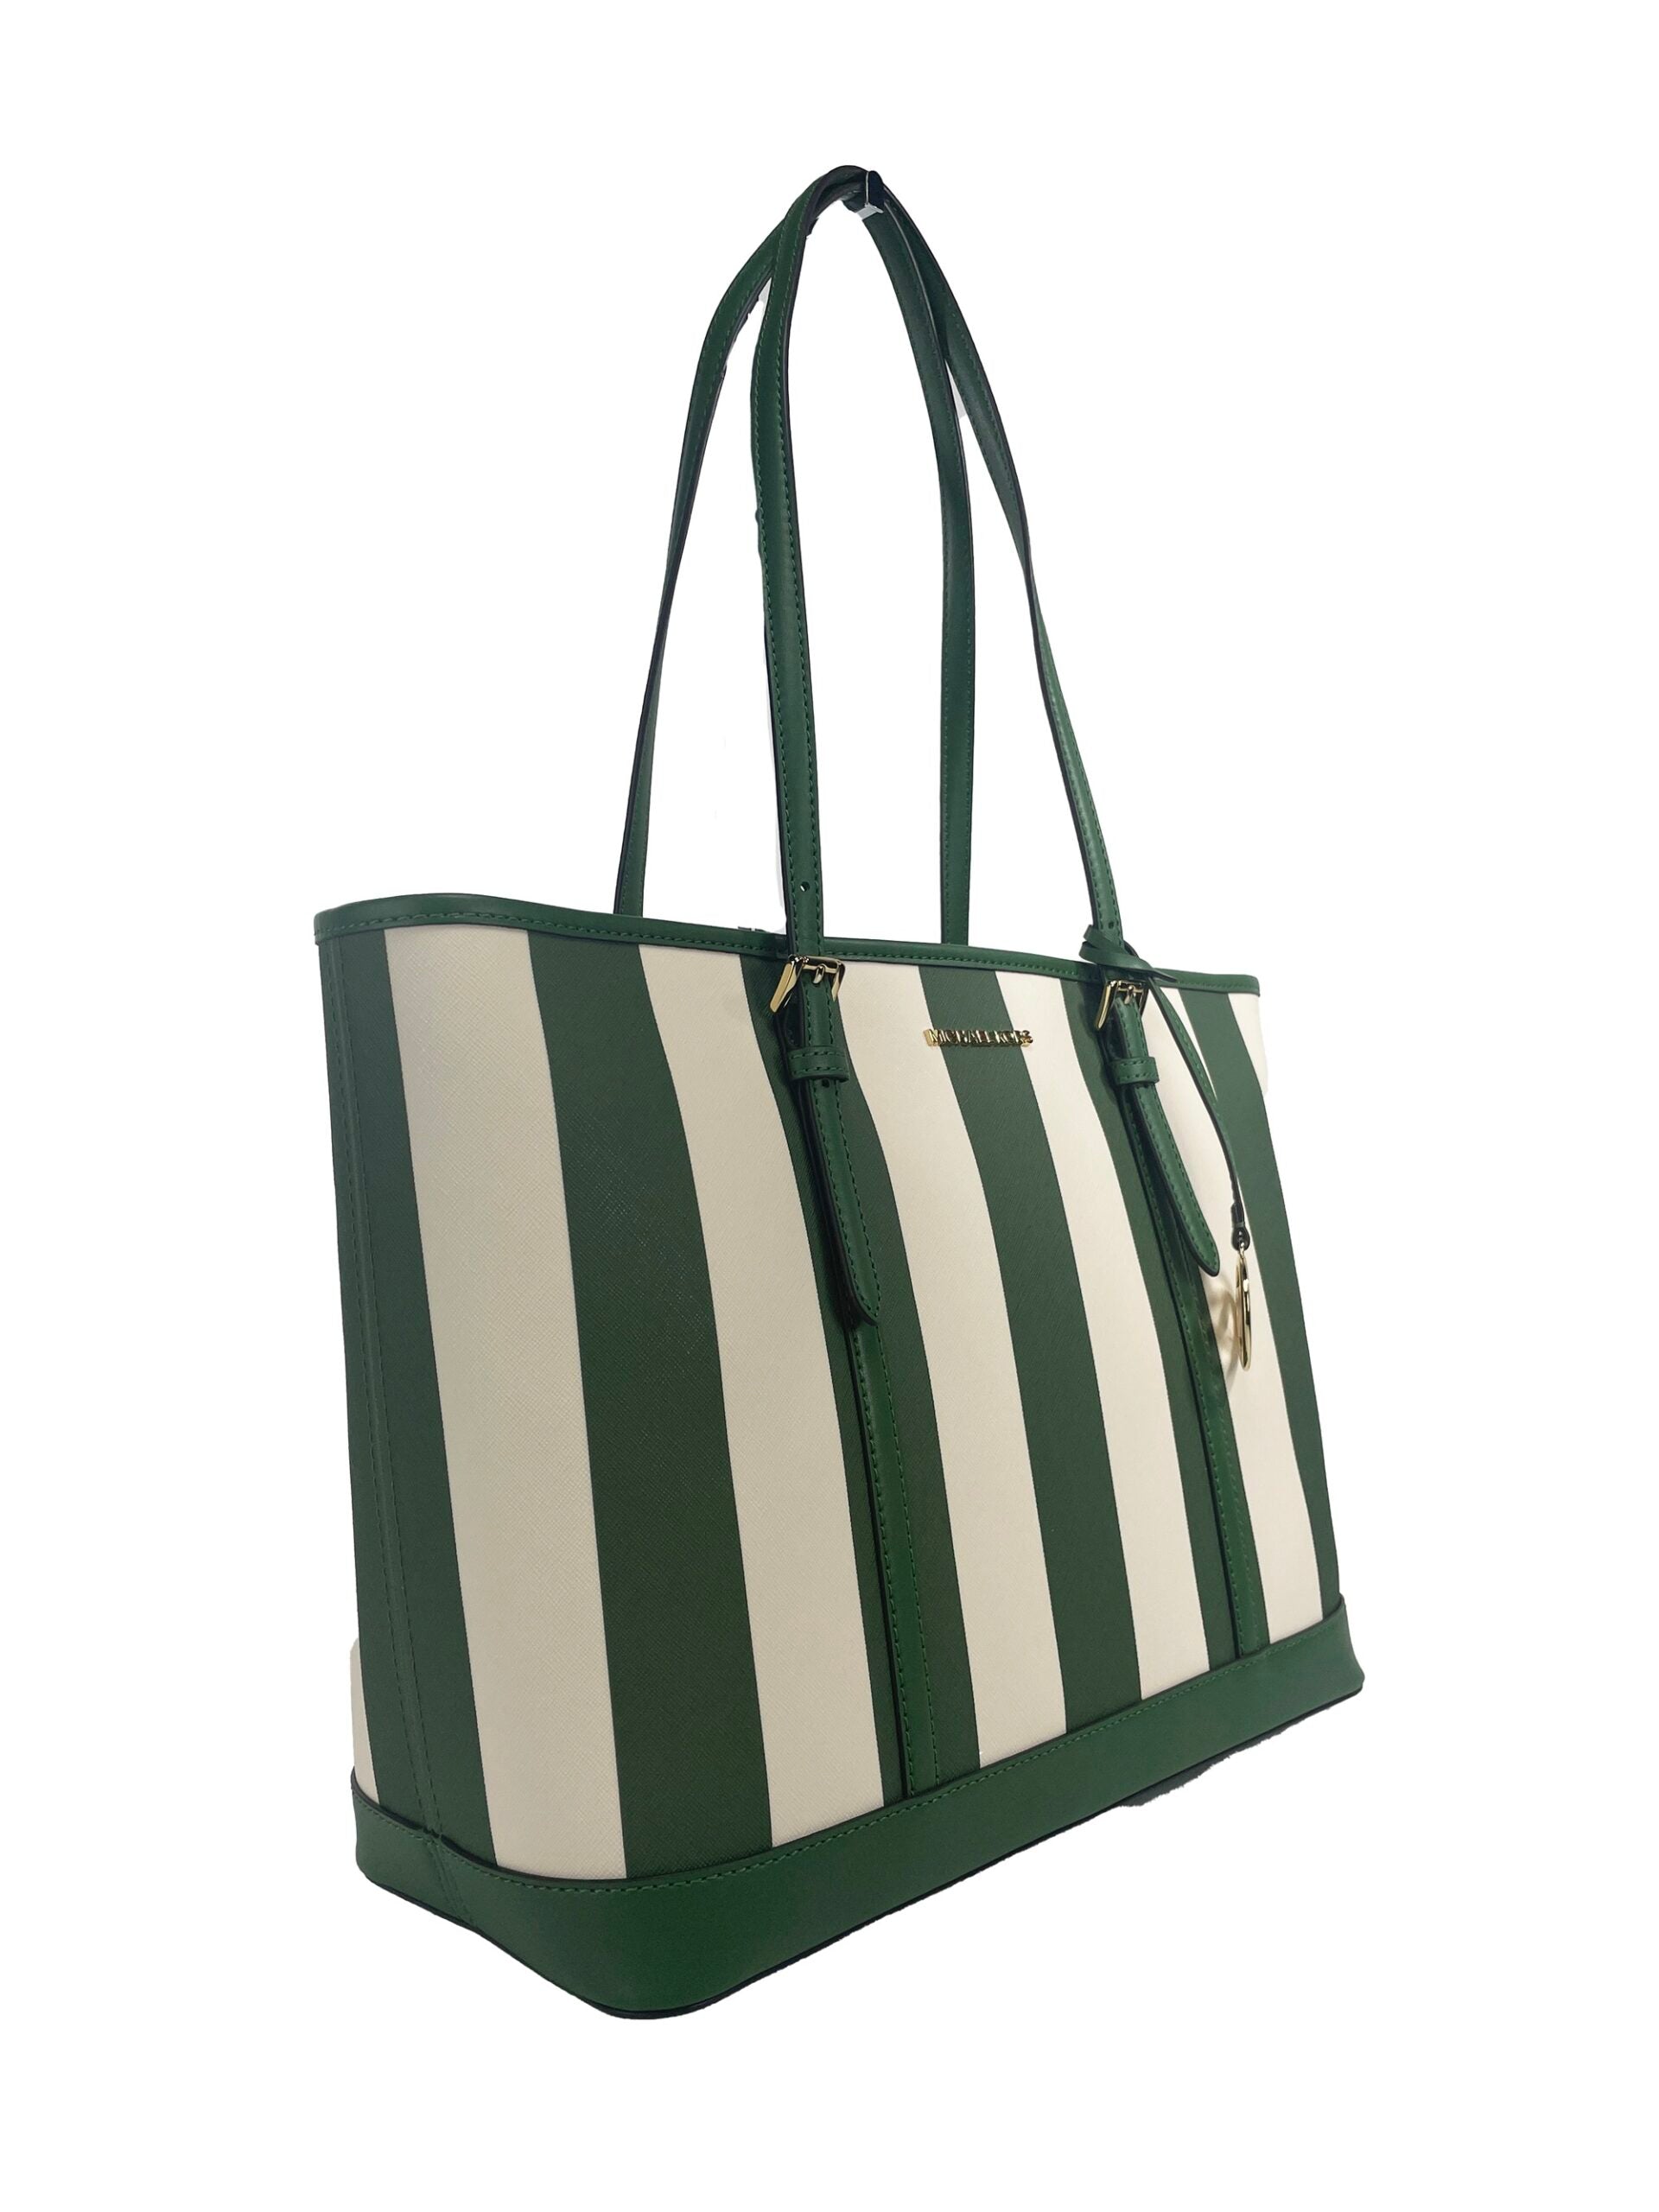 Jet Set Travel Large TZ Shoulder PVC Tote Bag Purse Fern Green - Divitiae Glamour